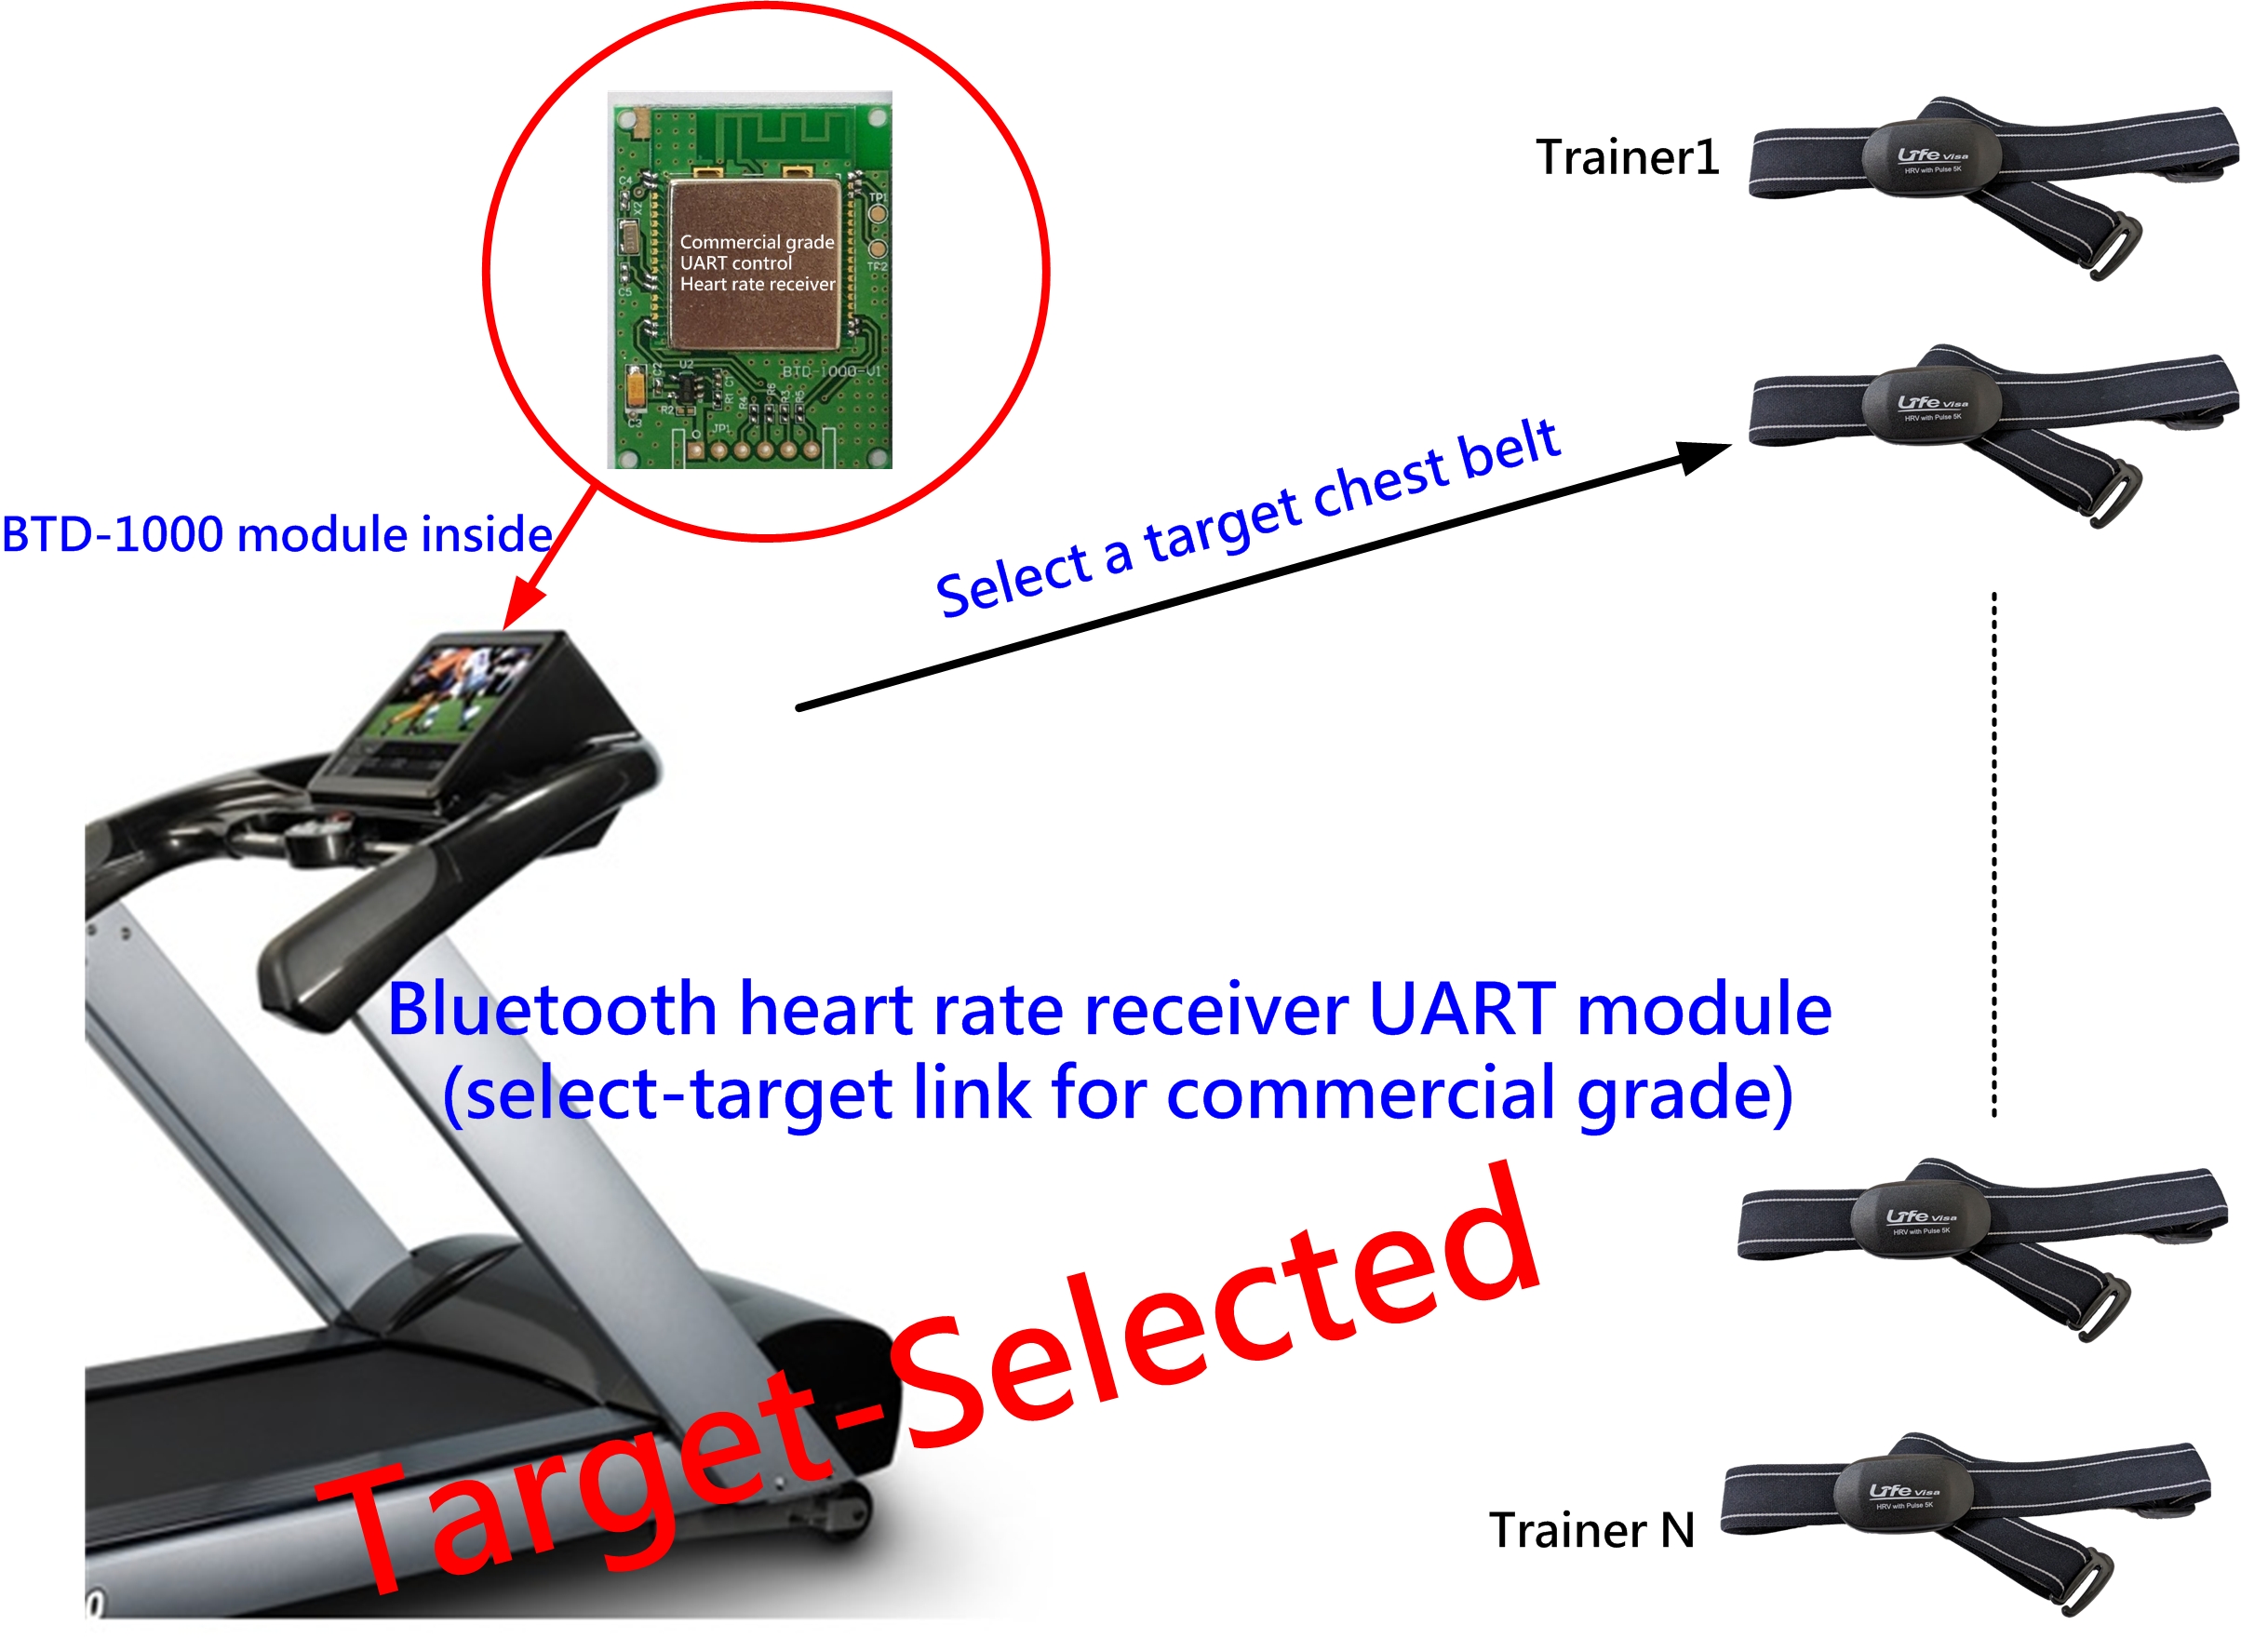 Bluetooth heart rate receiver,UART heart rate receiver,heart rate monitor,heart rate receiver module,Lifevisa,lifevisa,Taiwan Biotronic